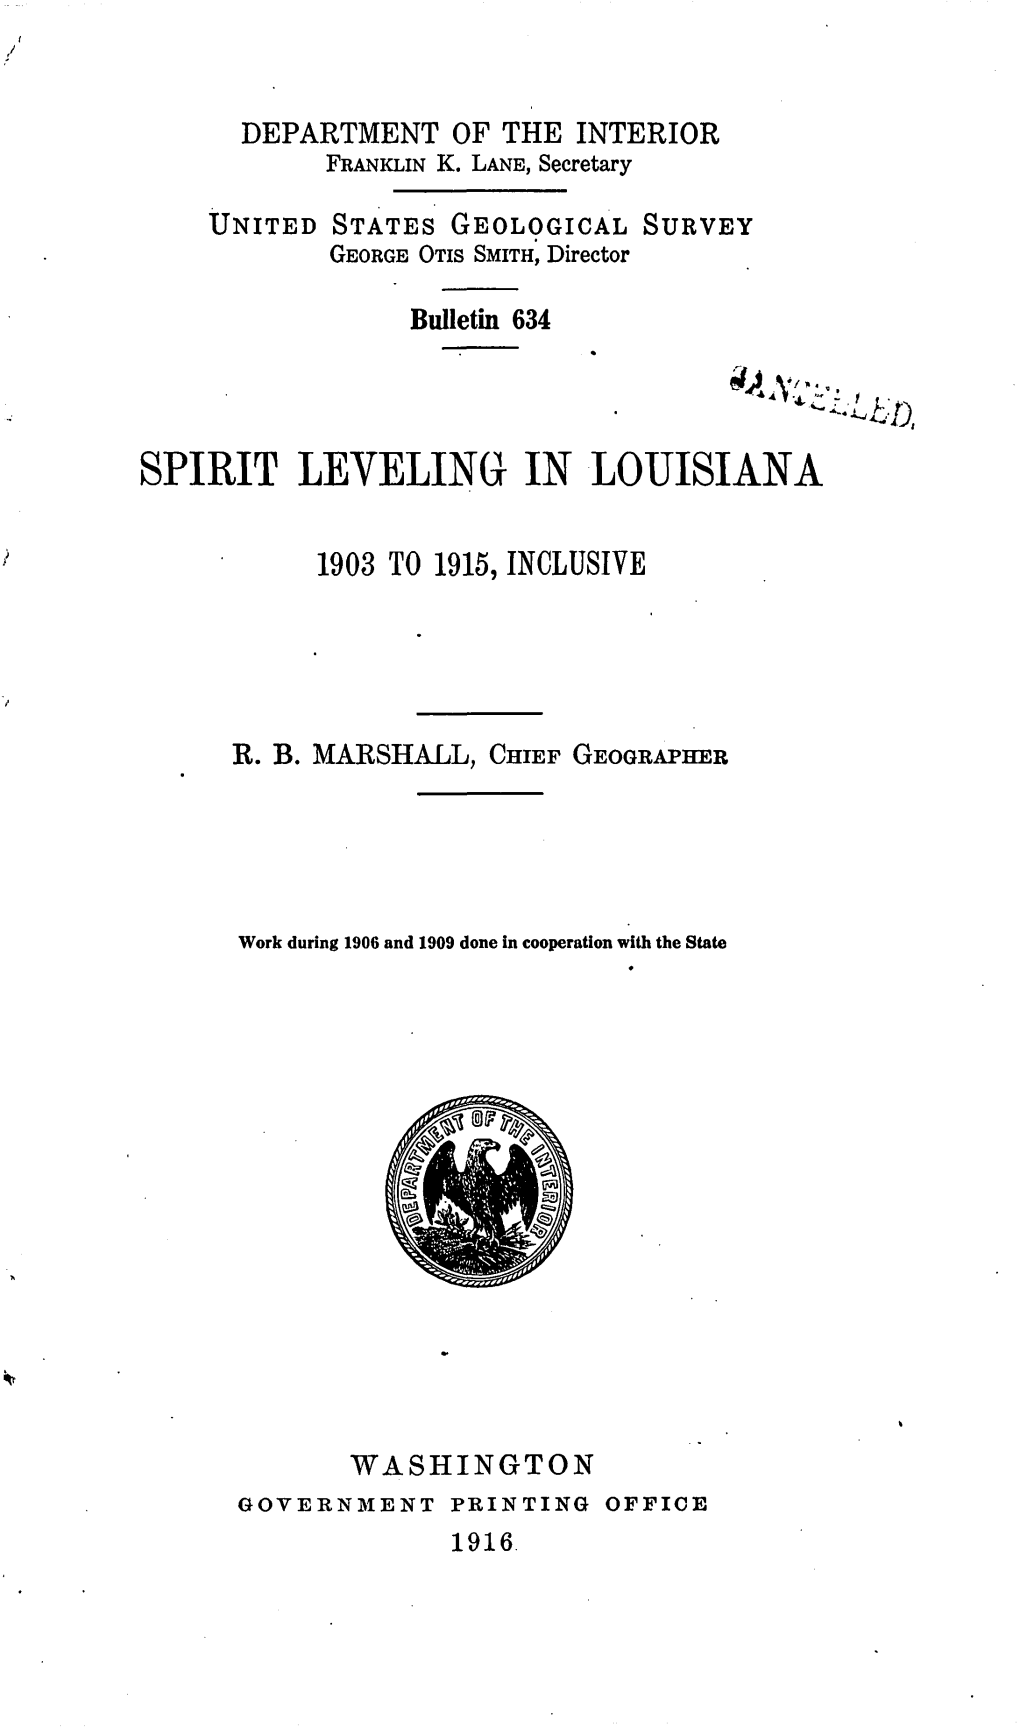 Spirit Leveling in Louisiana